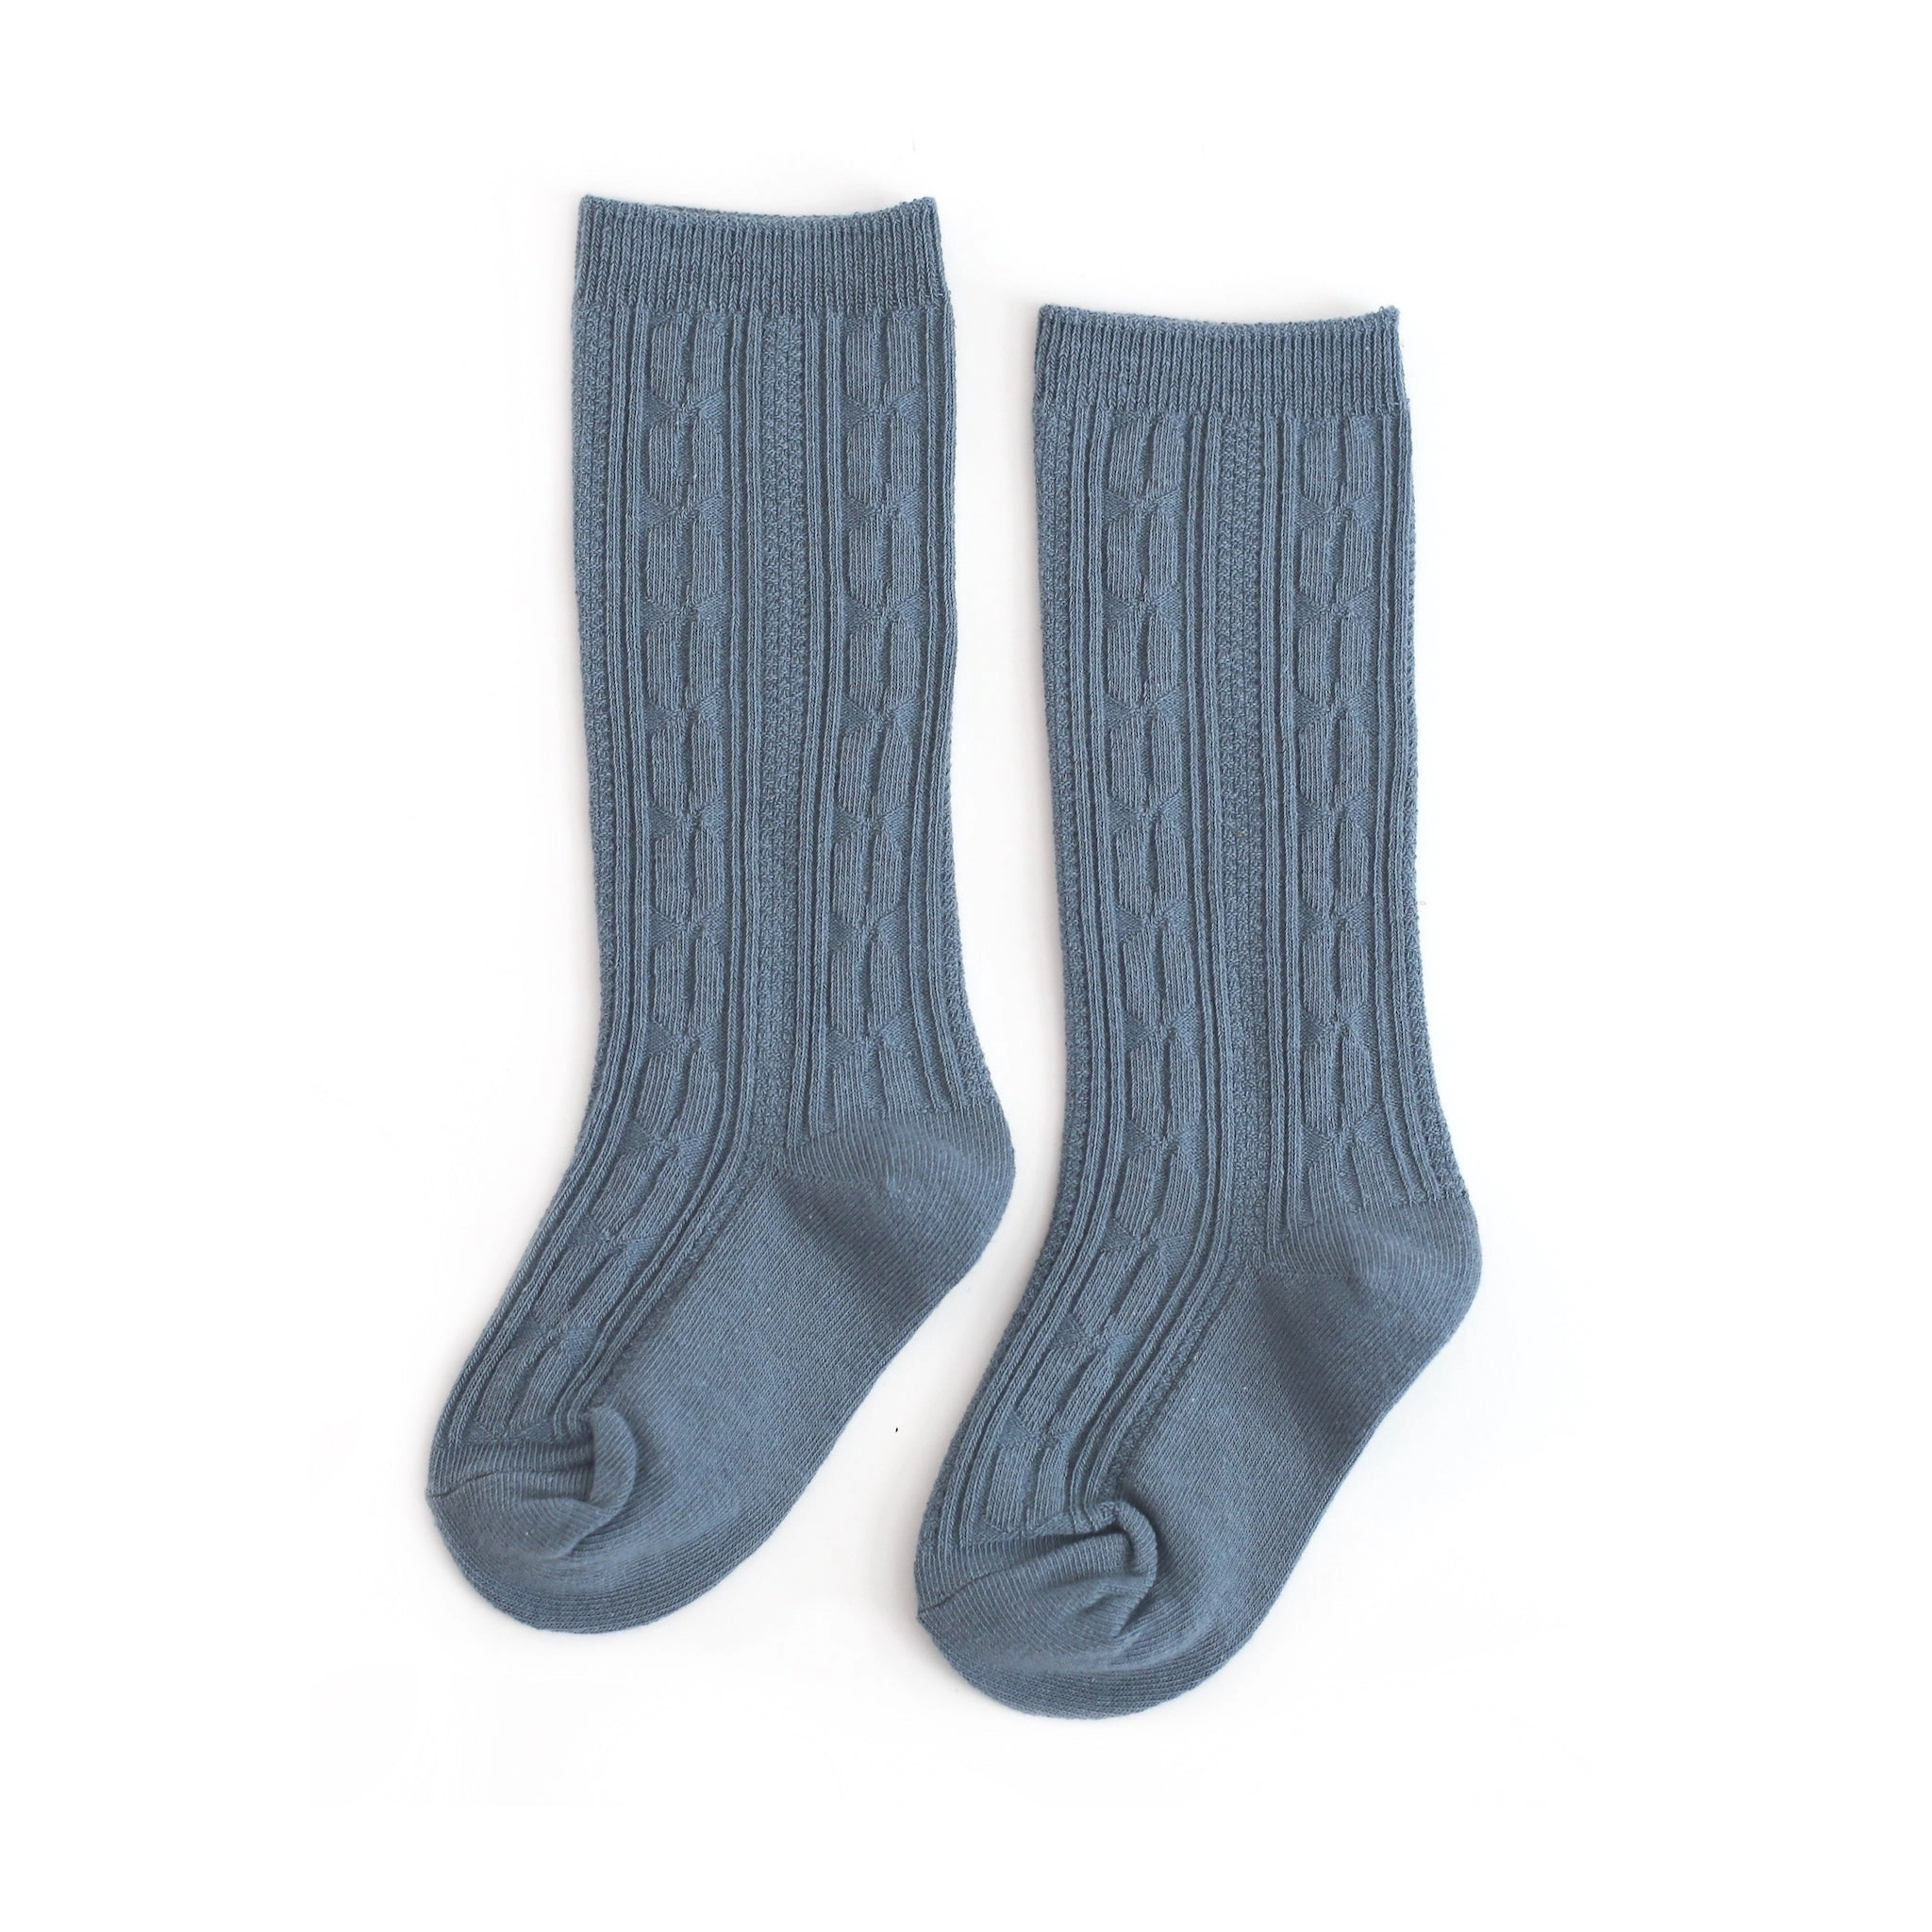 Denim Cable Knit Knee High Socks - Little Stocking Co.